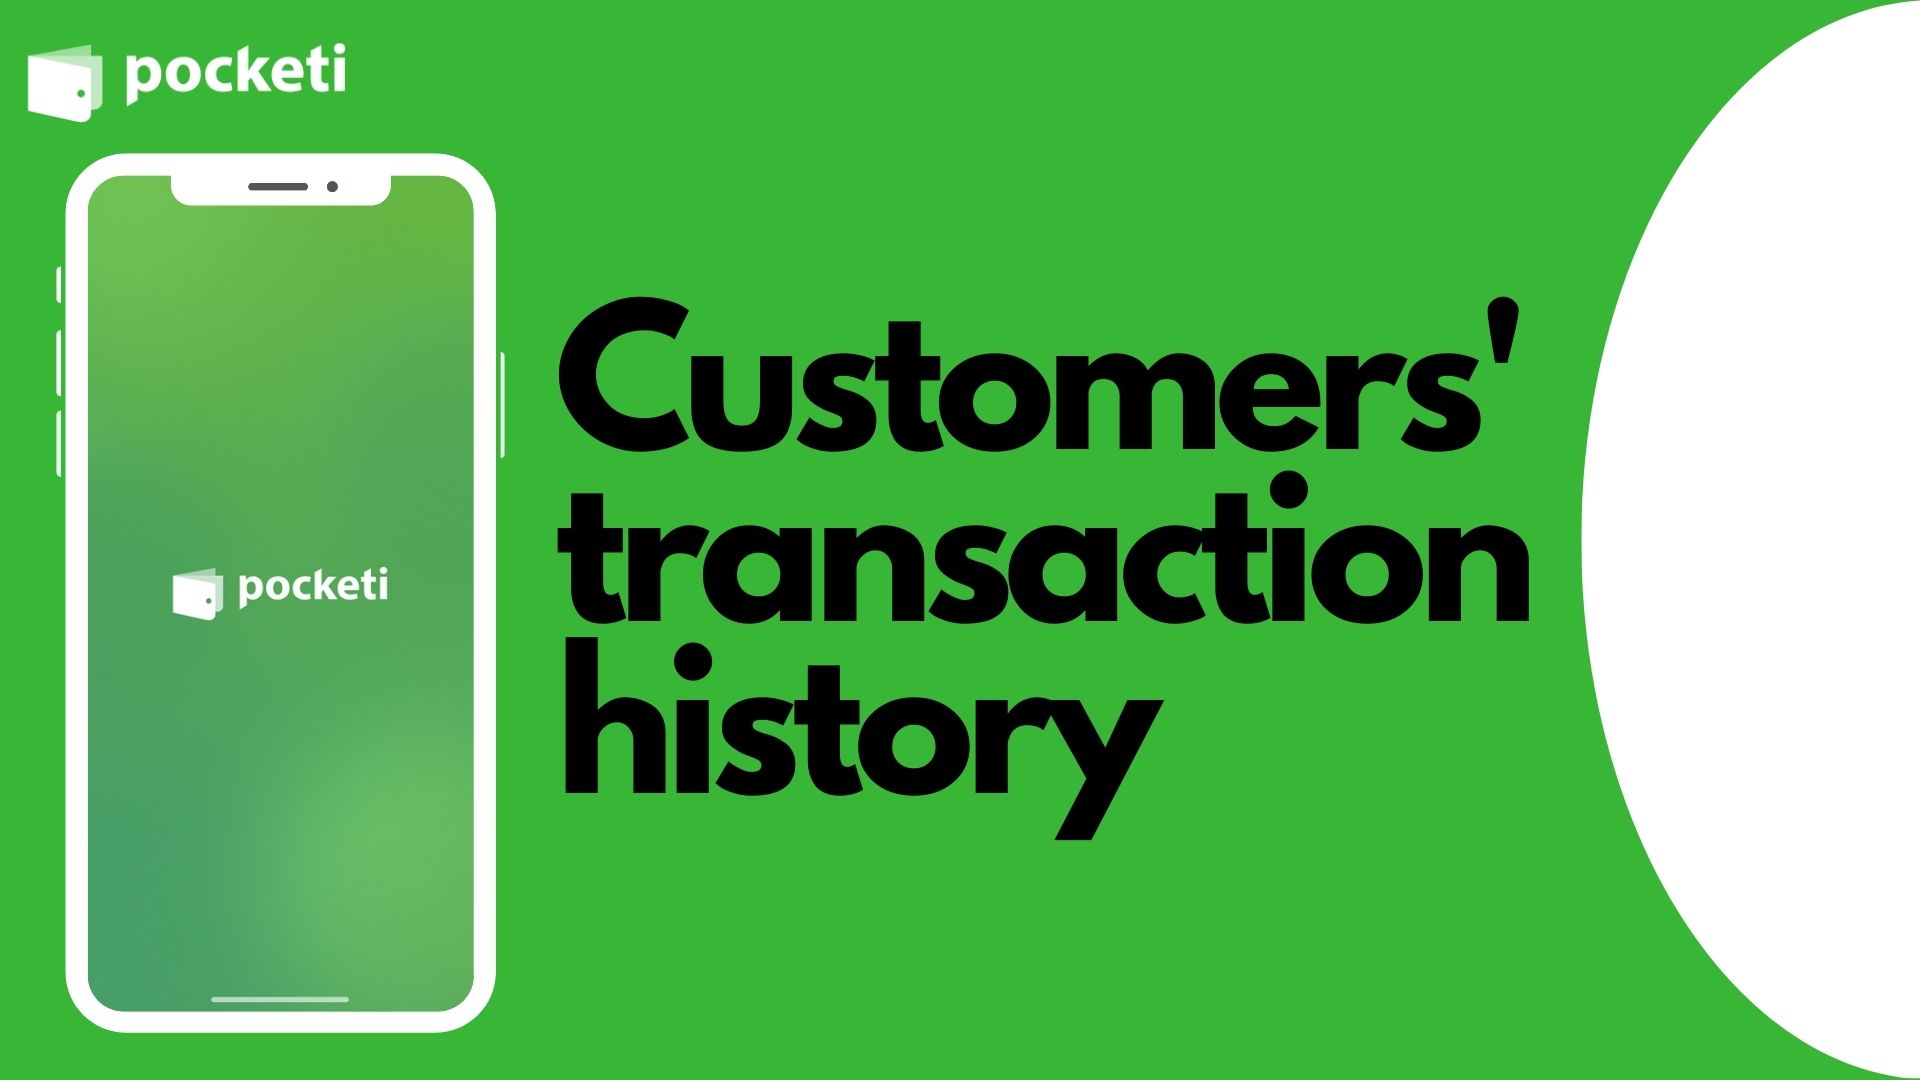 Transaction history